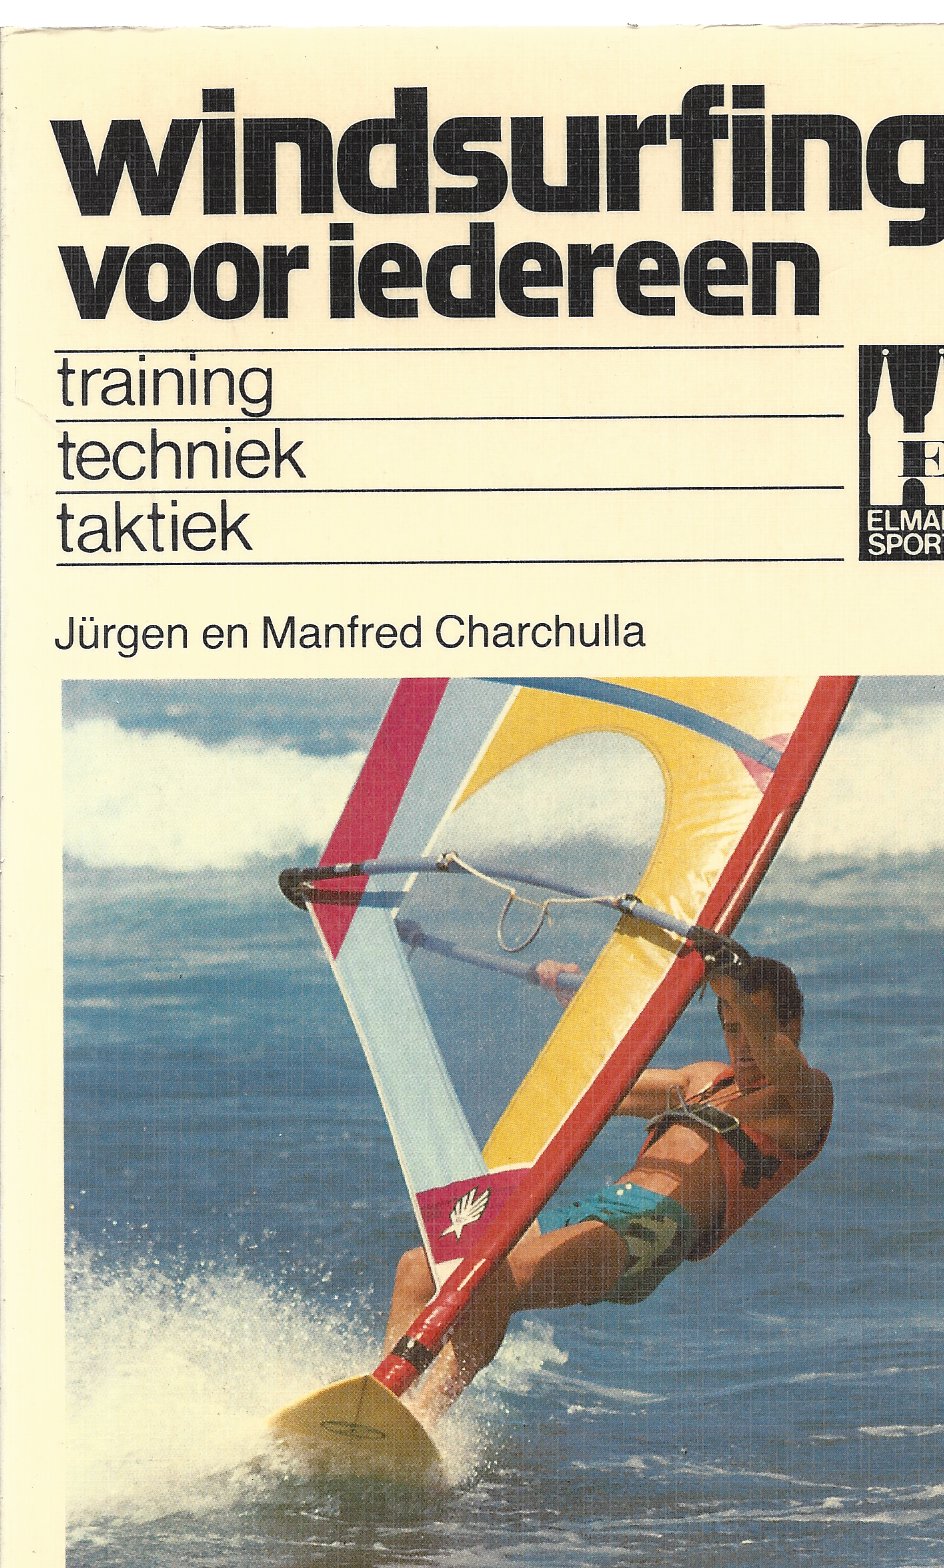 Carchulla,Jürgen en Manfred - Windsurfing voor iedereen -Training techniek Taktiek